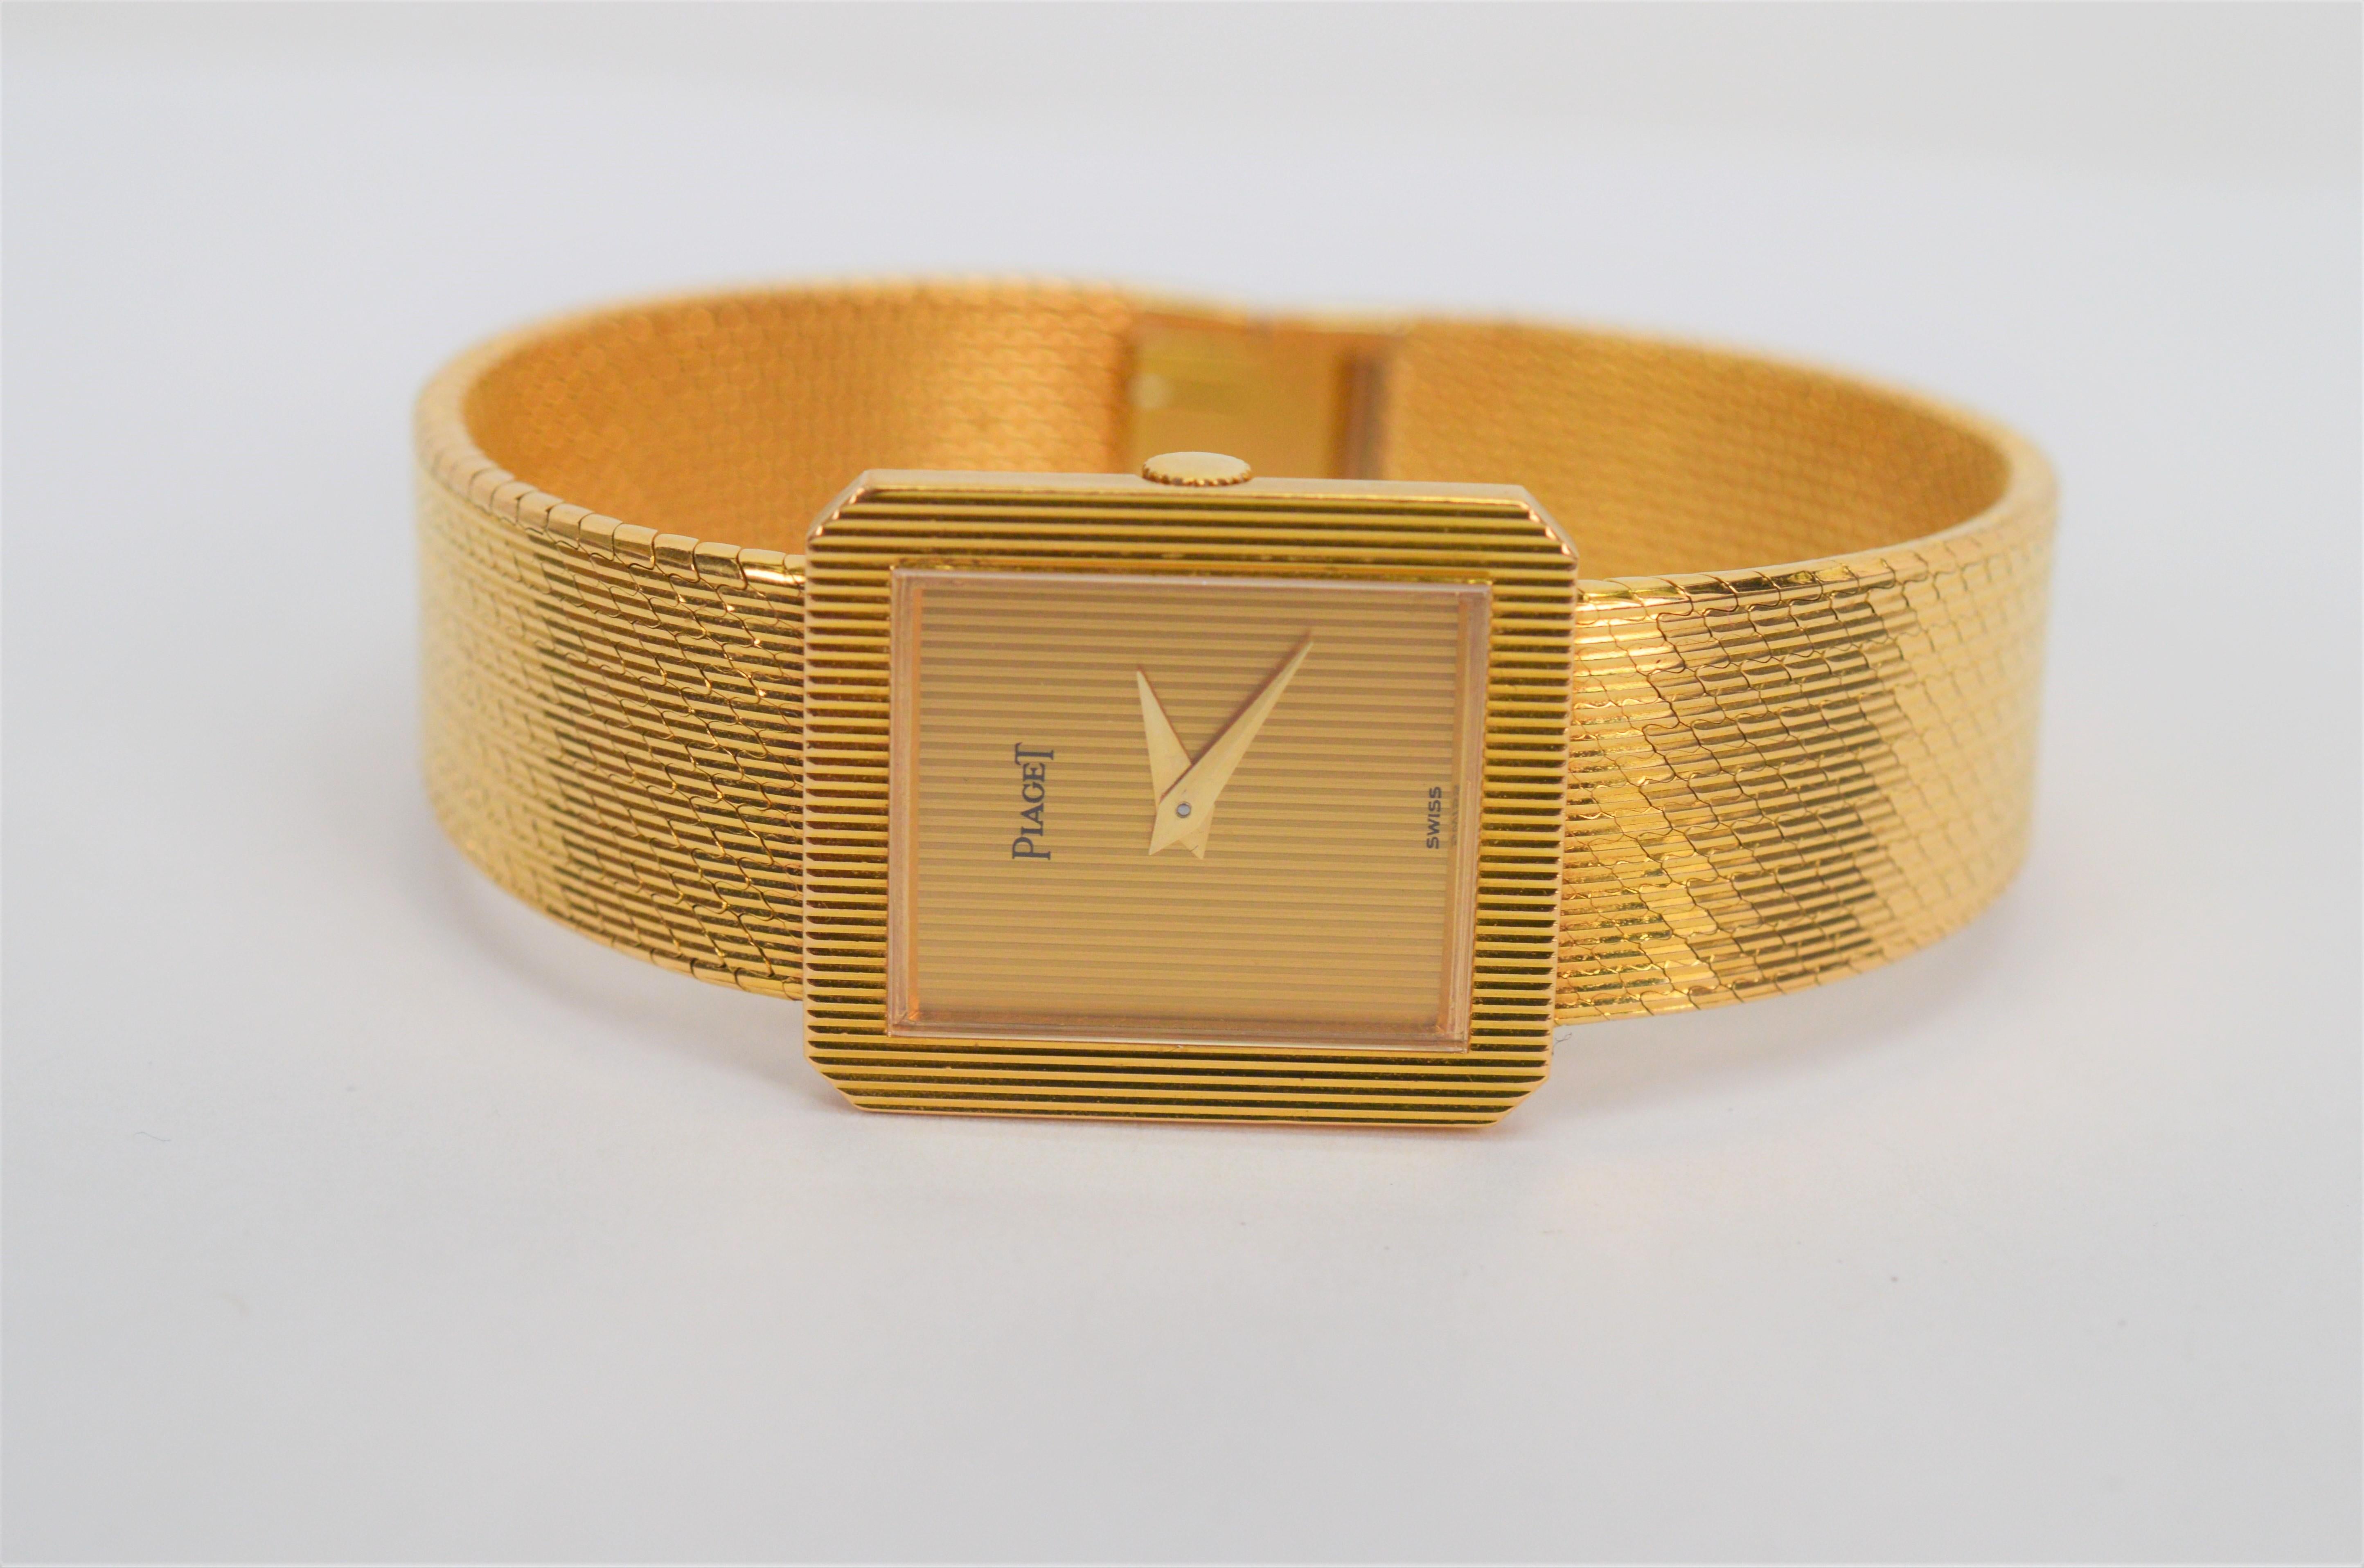 Piaget Protocol 18 Karat Gold Womens Bracelet Wrist Watch 5